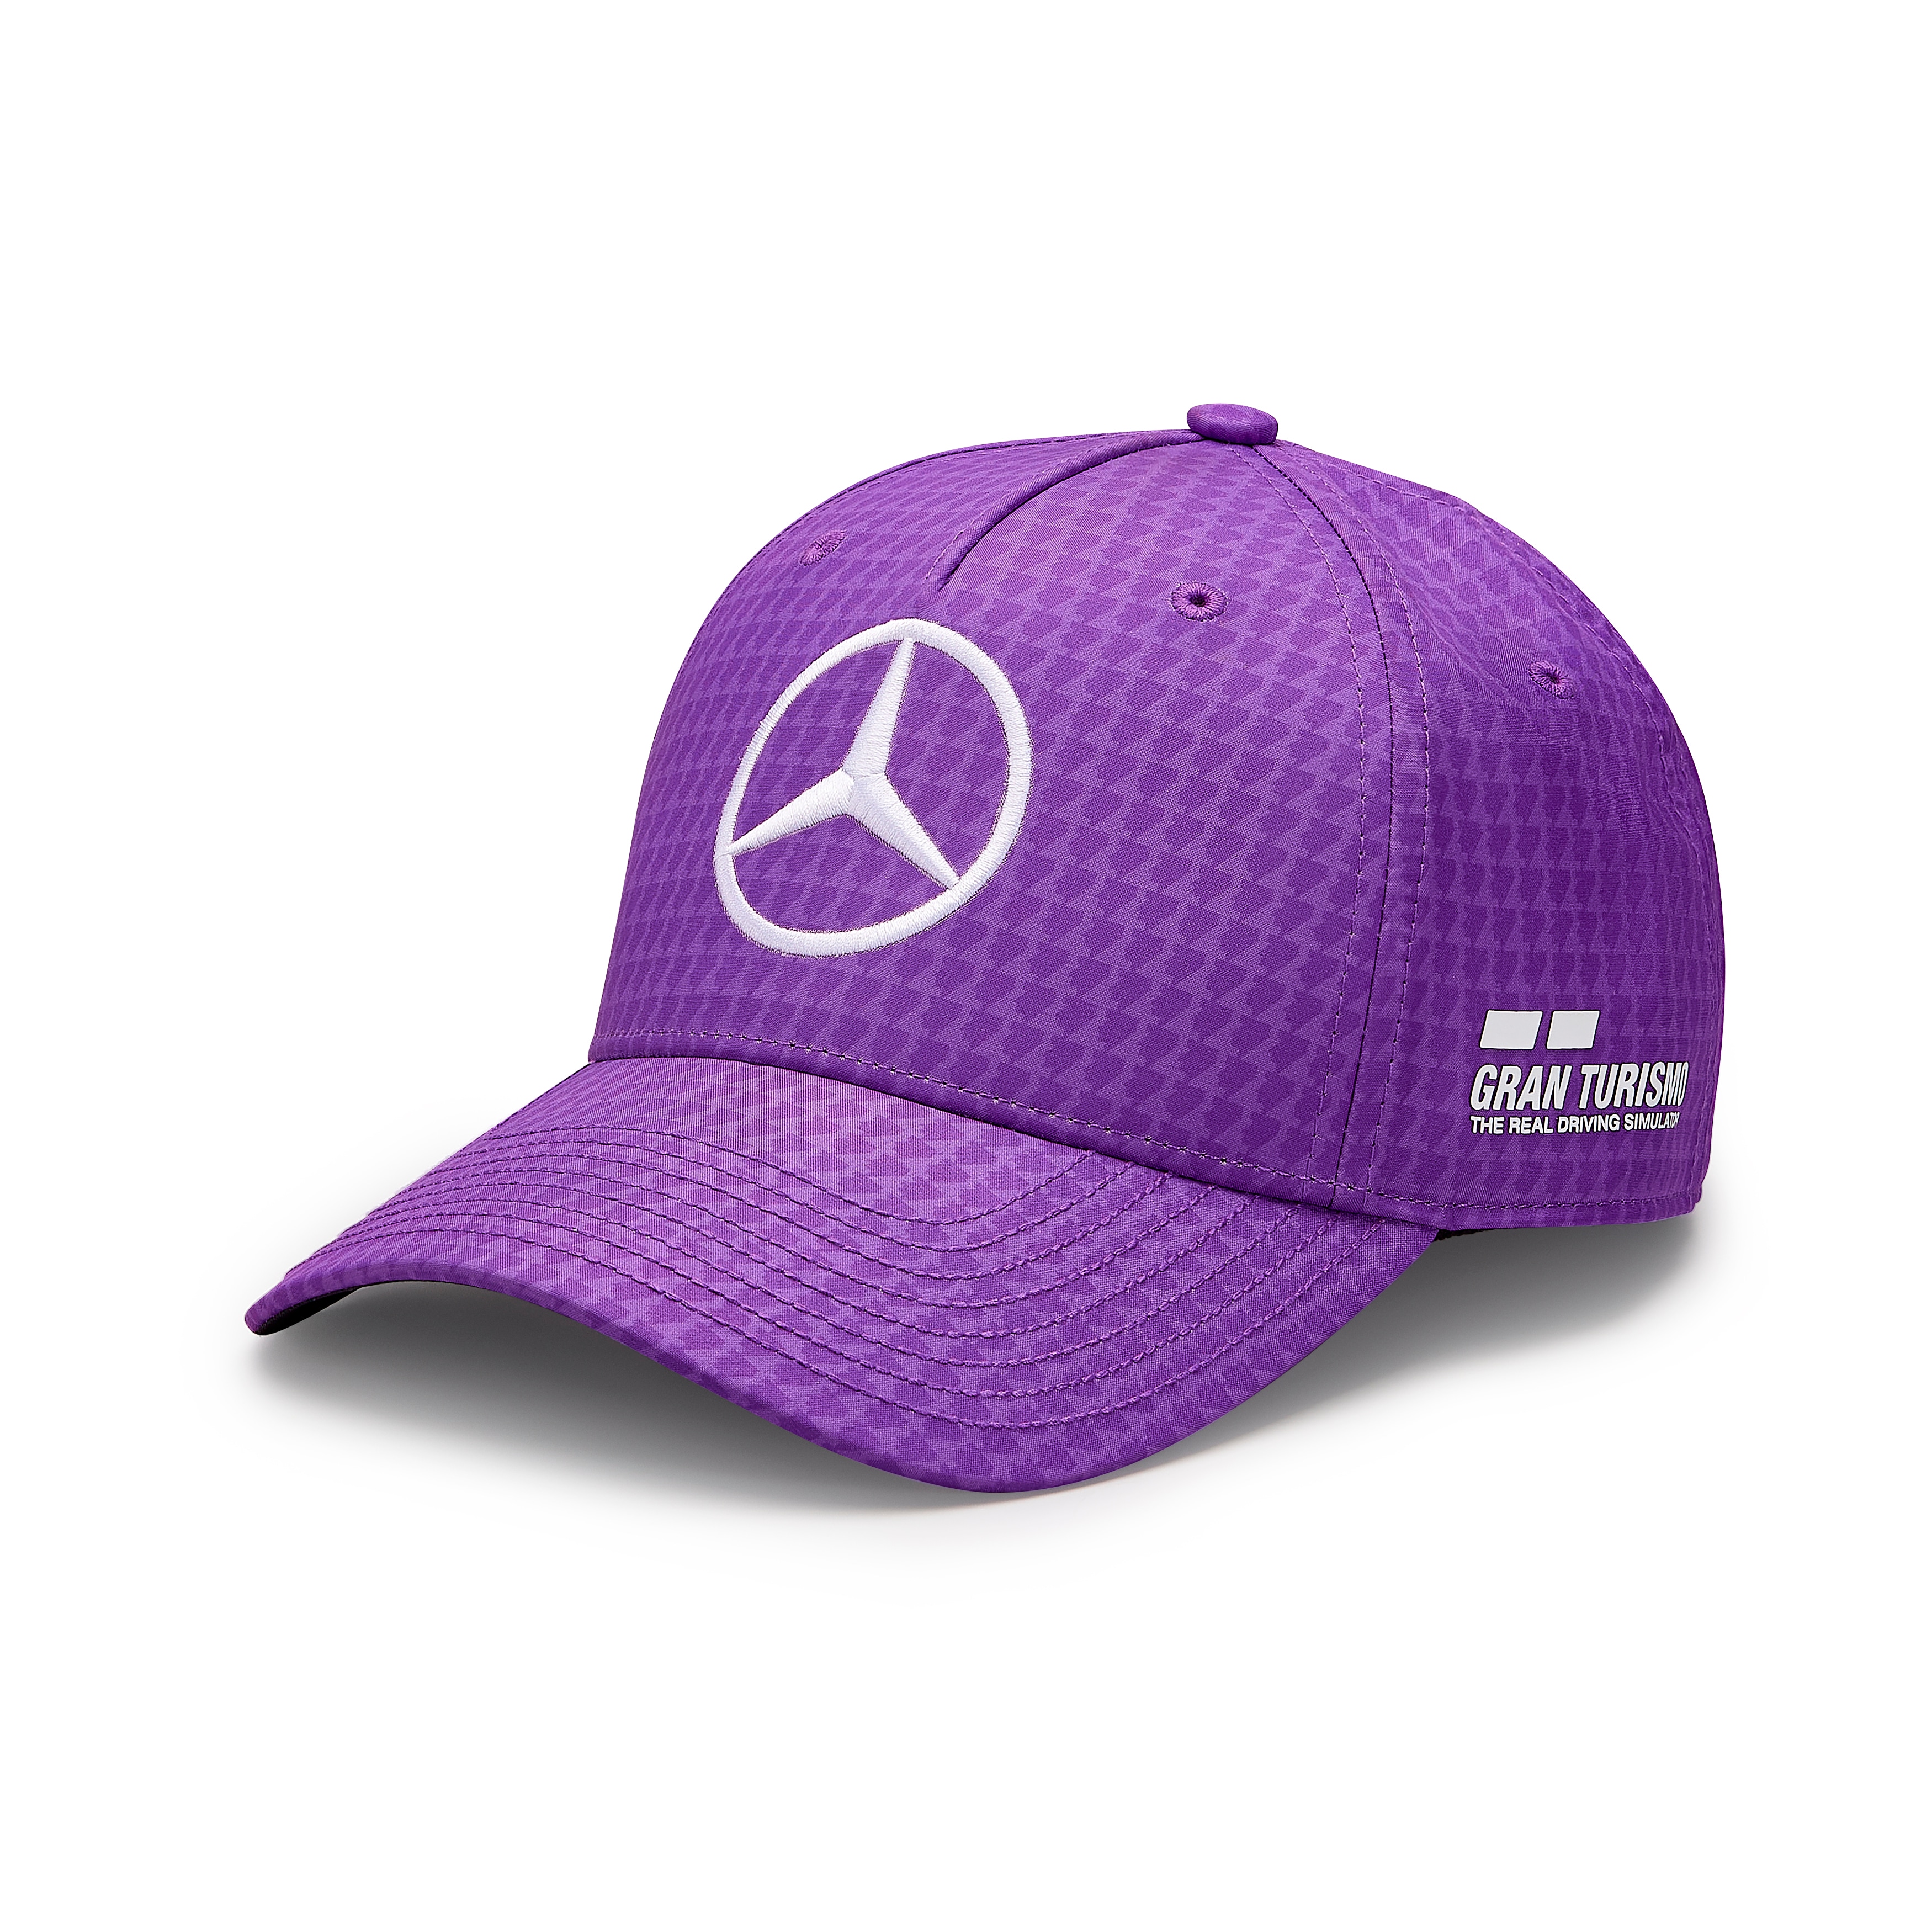 Cap, Lewis Hamilton, Mercedes-AMG F1 - lila, Polyester